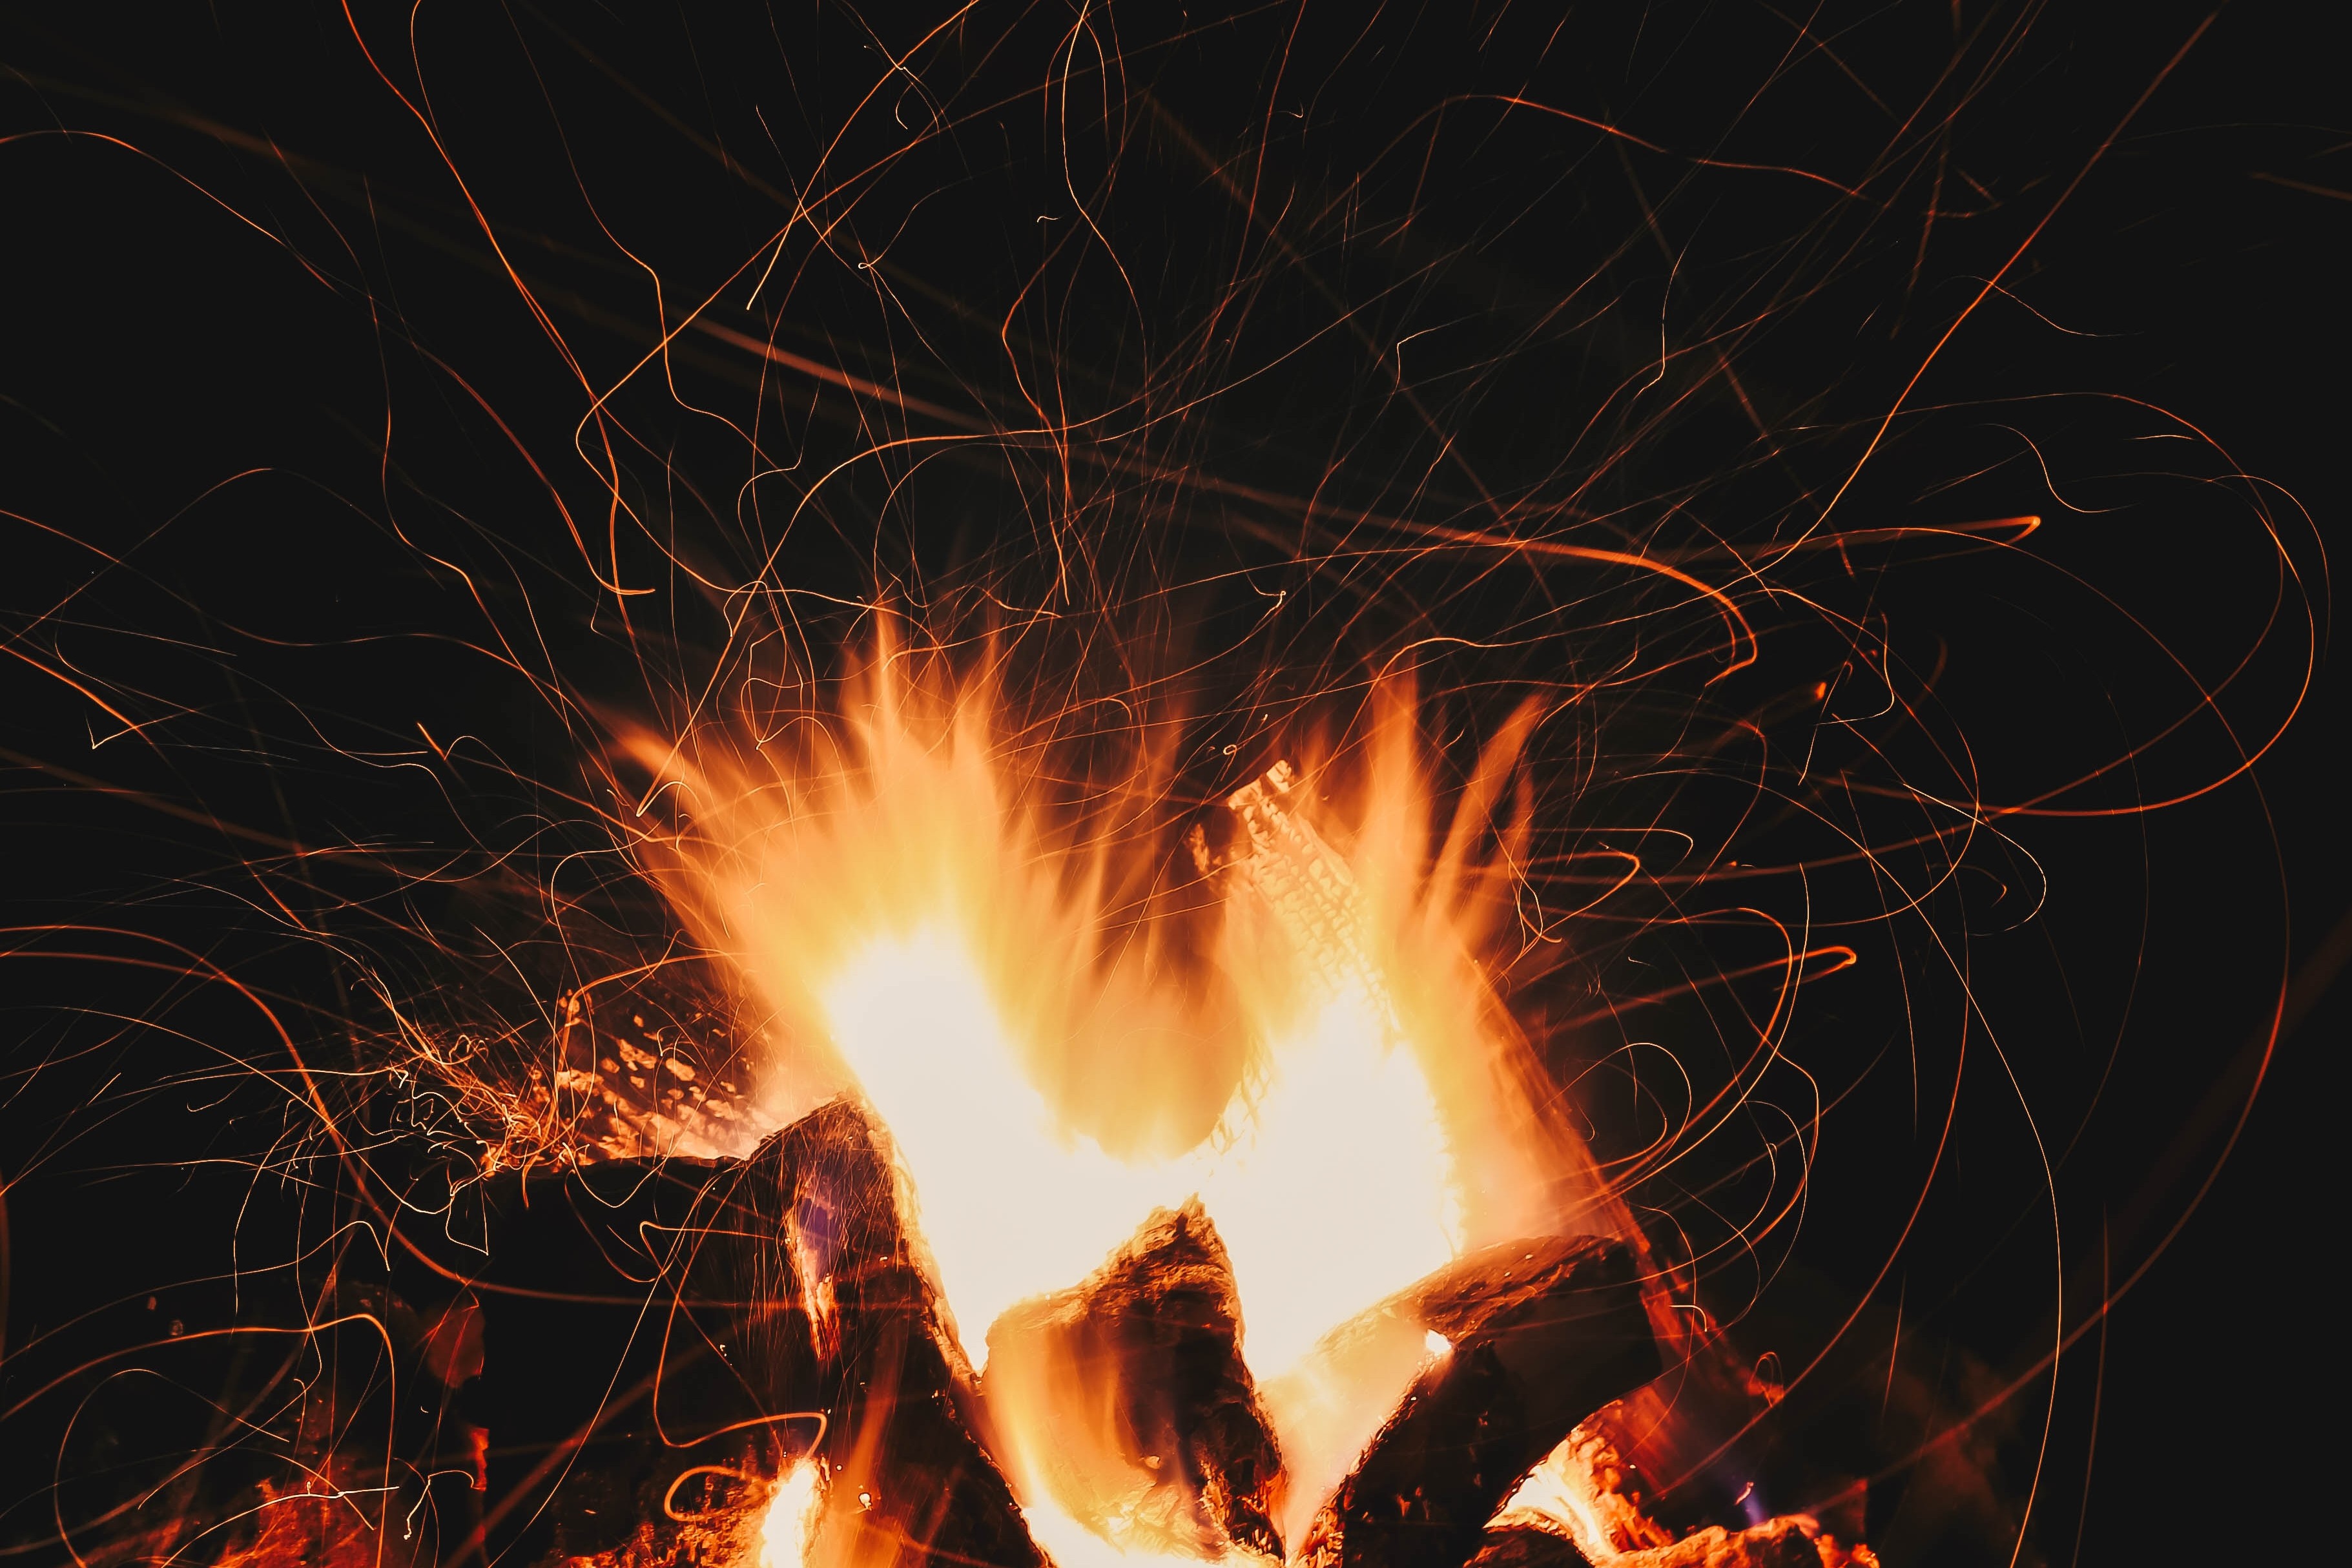 flame kindling against a dark background